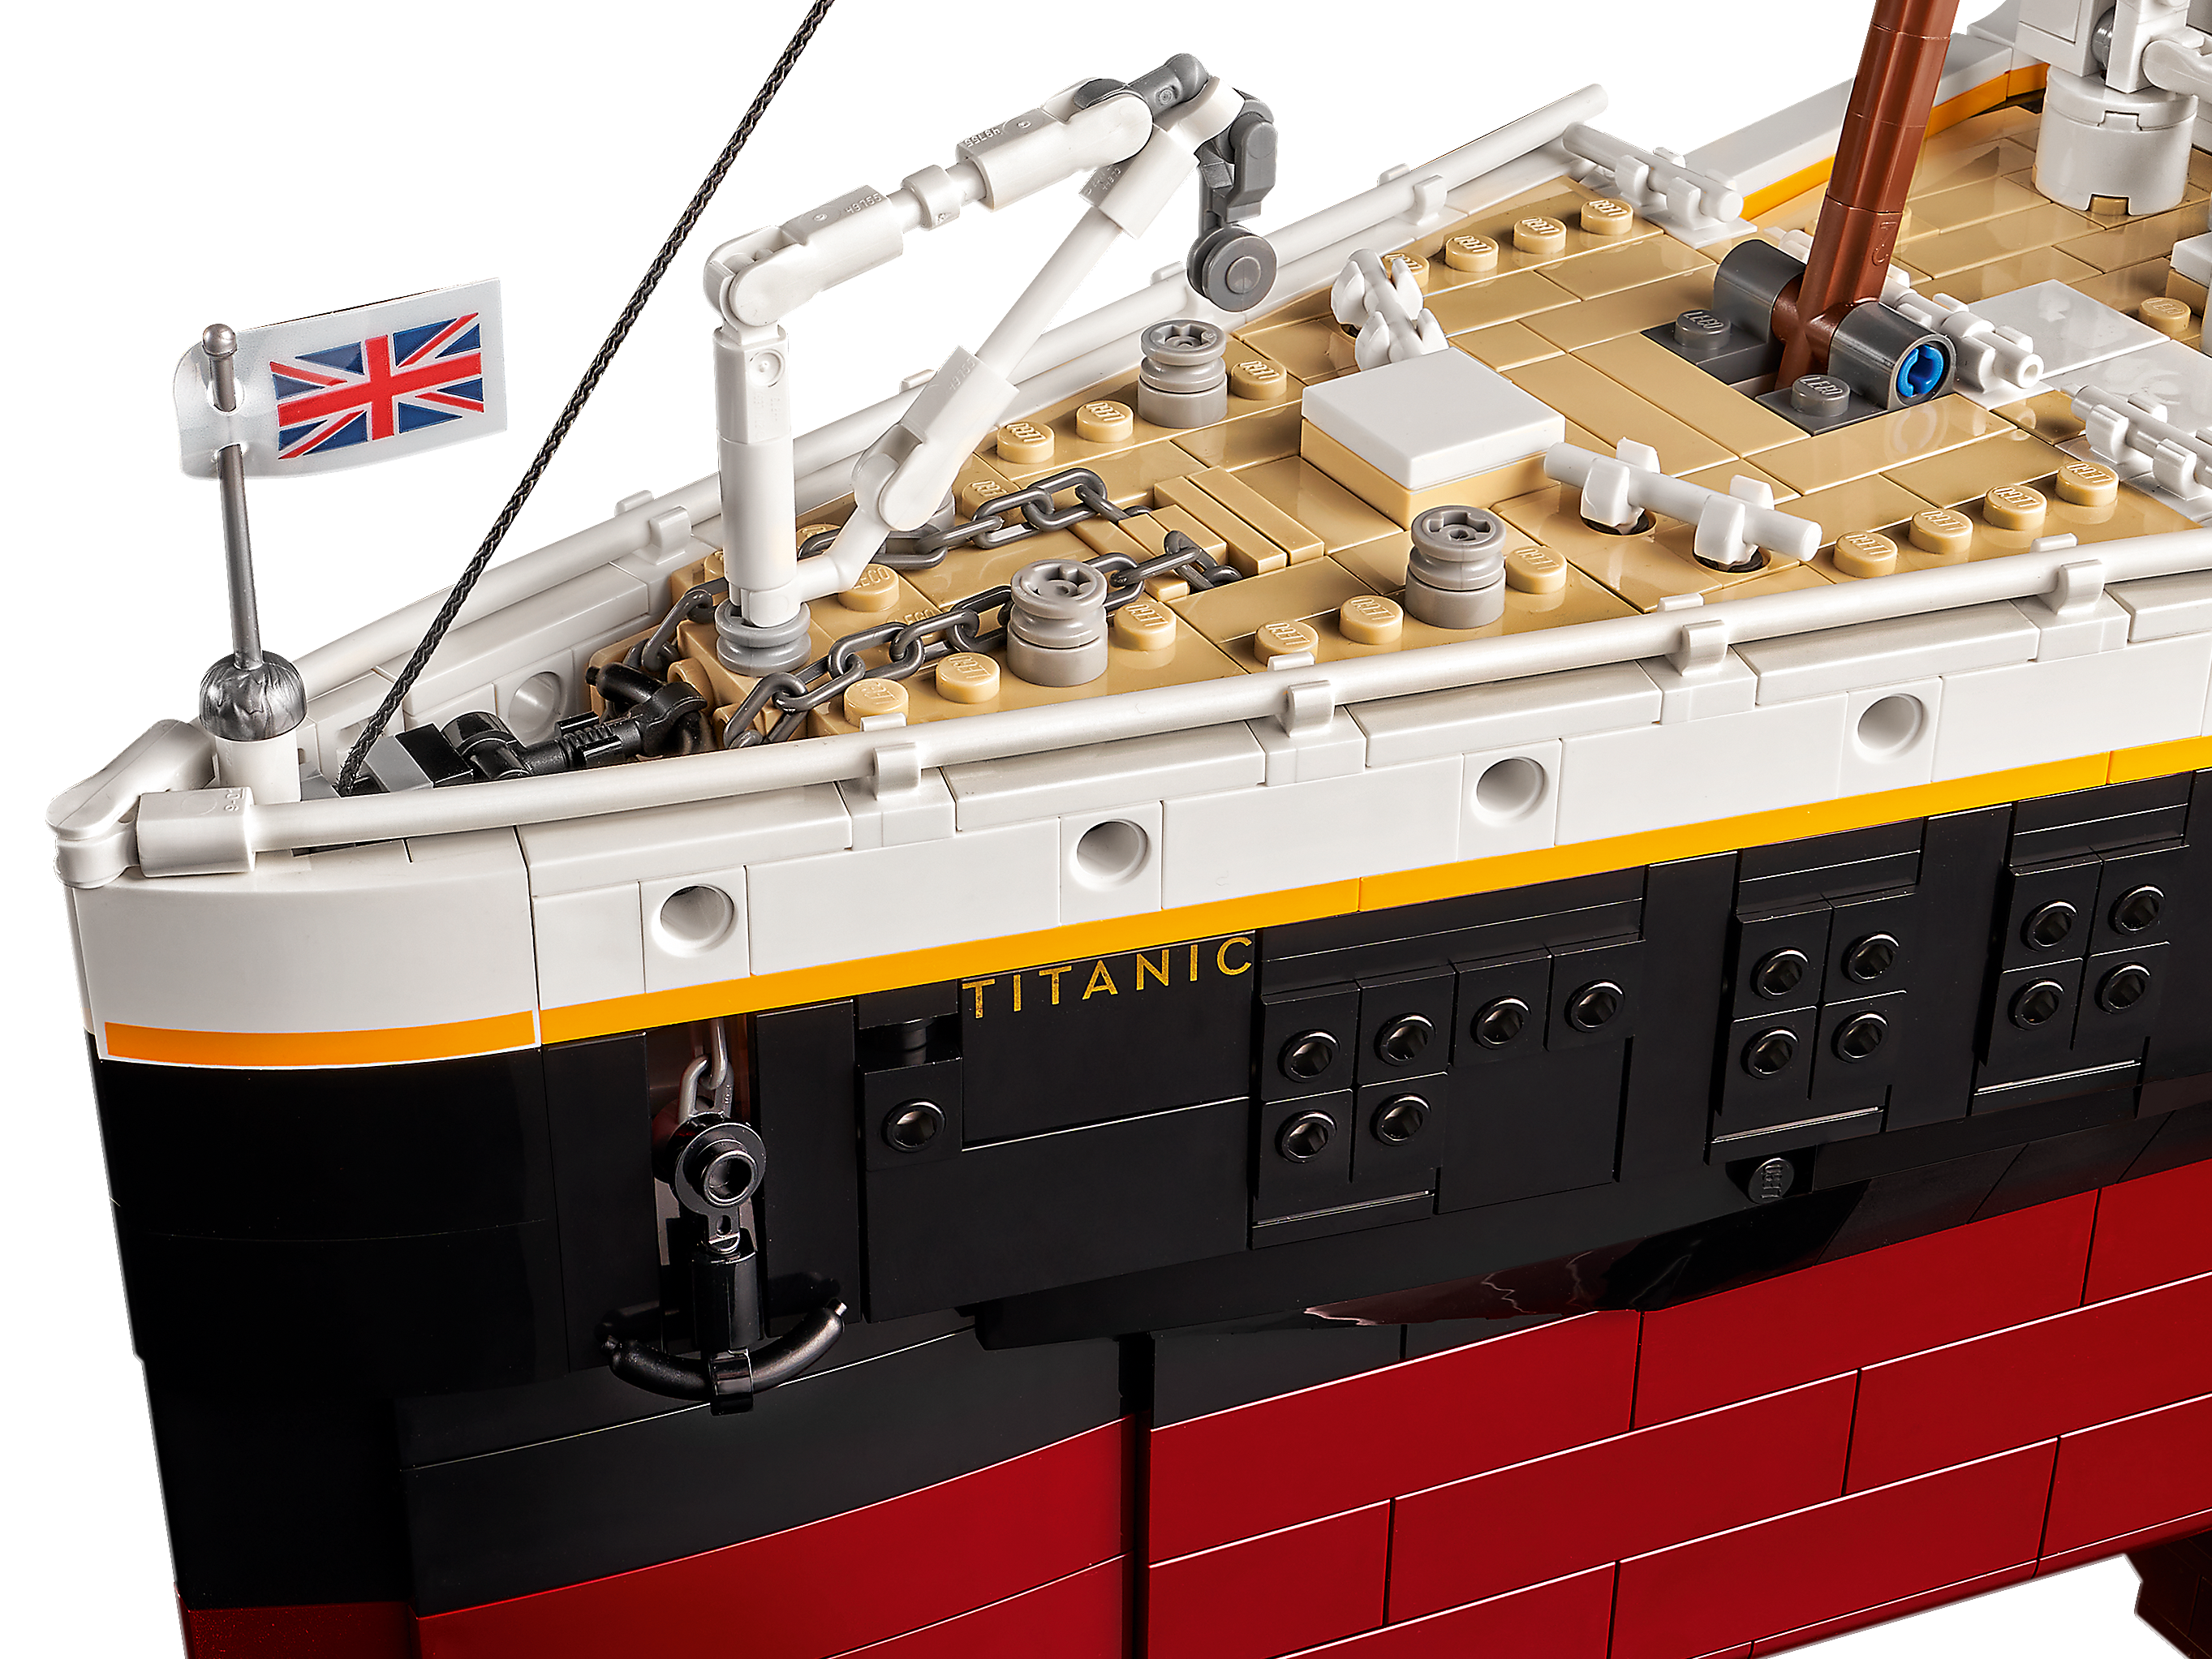 LEGO MOC Micro Titanic 10294 Alt by TerribleMOCs